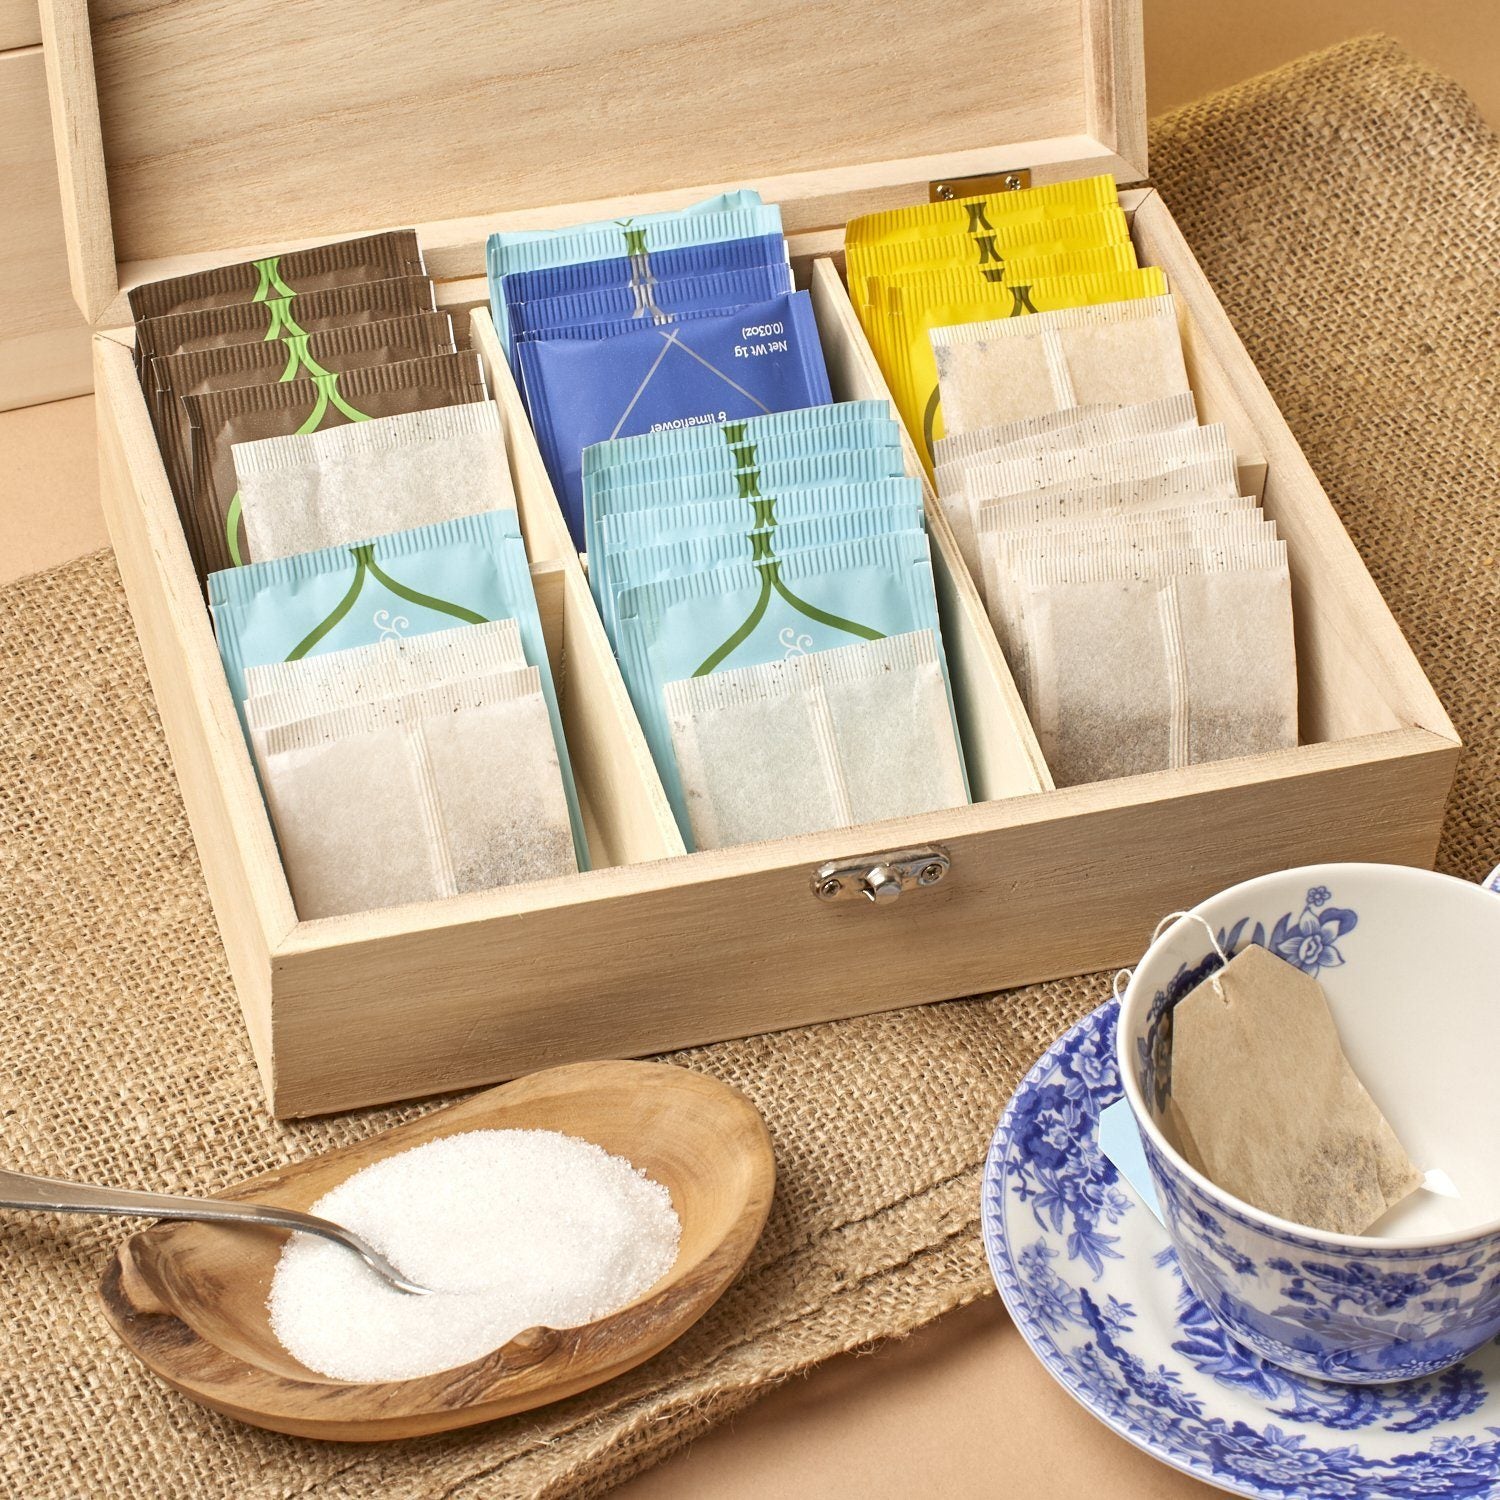 Tea Box - Bepoke Tea Storage Box Or Caddy - Time For Tea Design